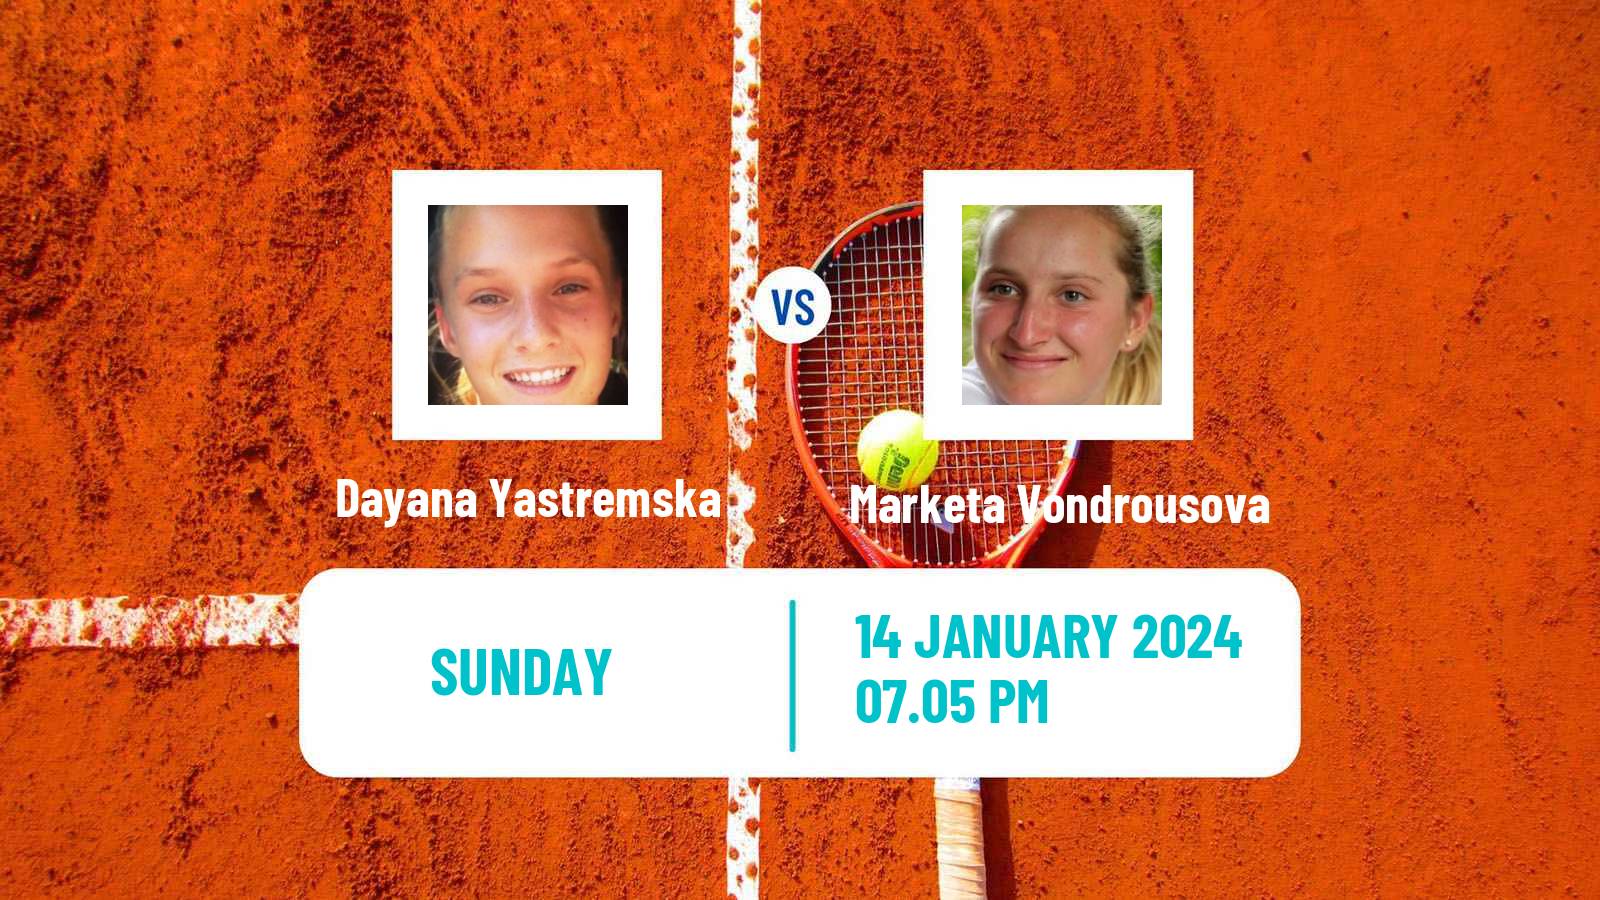 Tennis WTA Australian Open Dayana Yastremska - Marketa Vondrousova